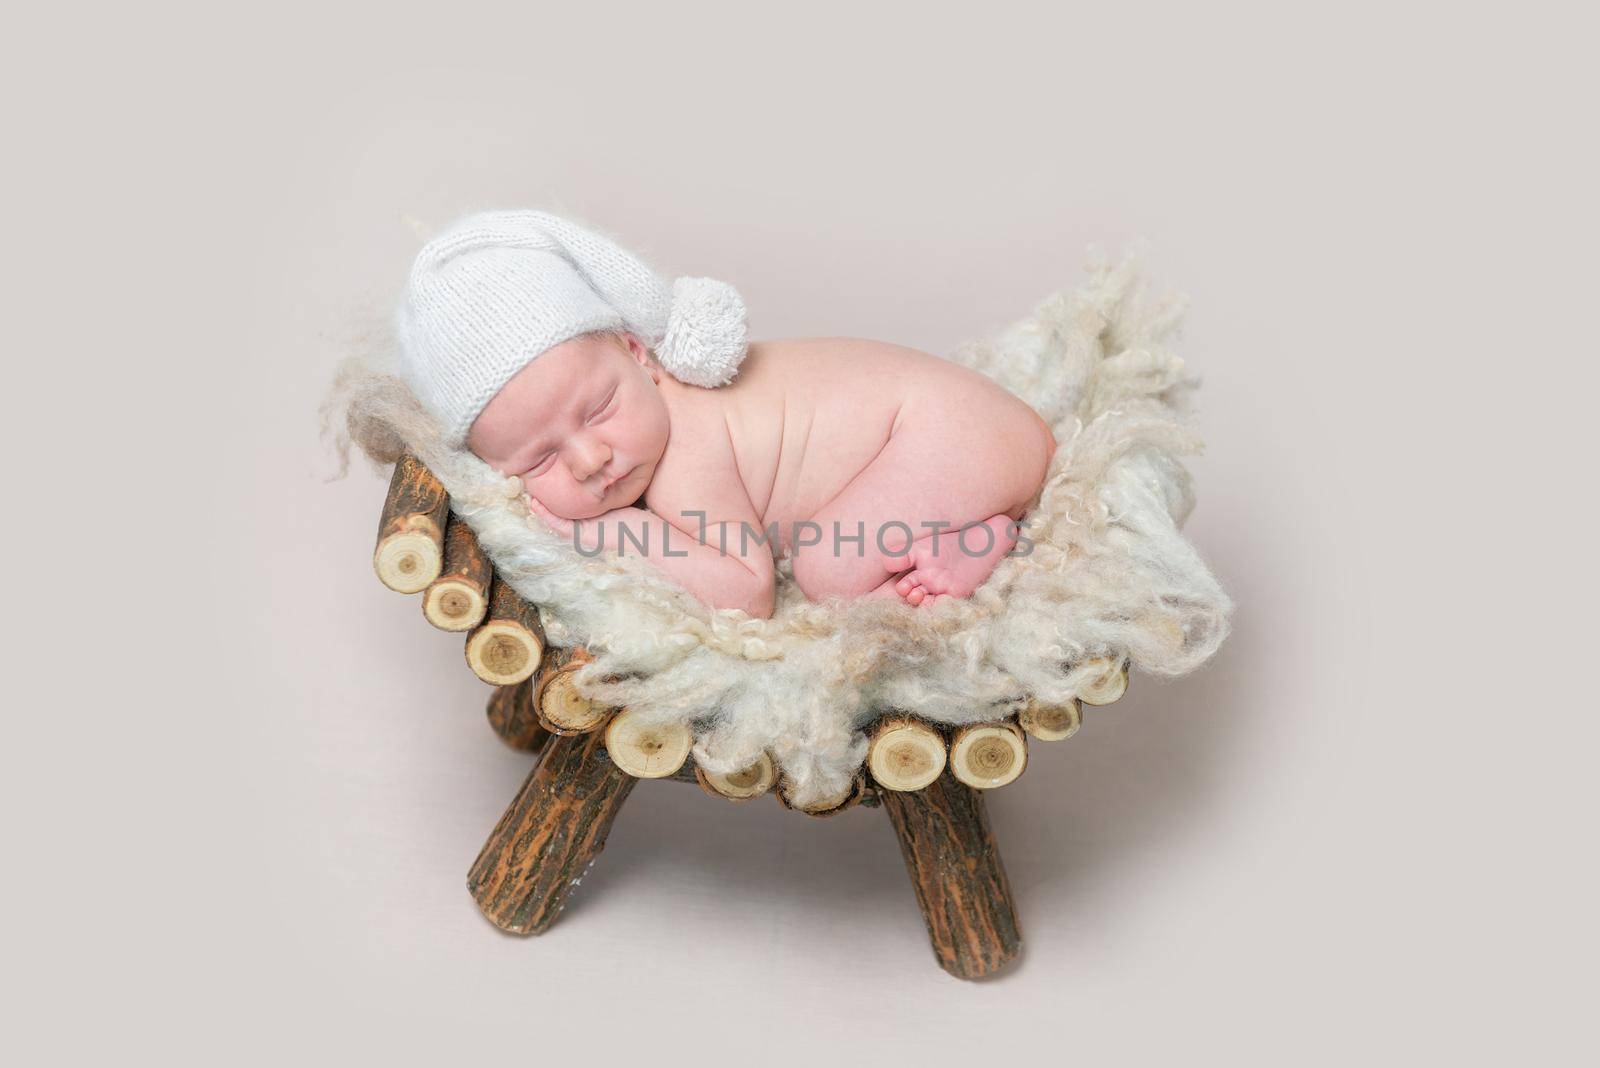 Newborn baby sleeps on a wooden homemade crib